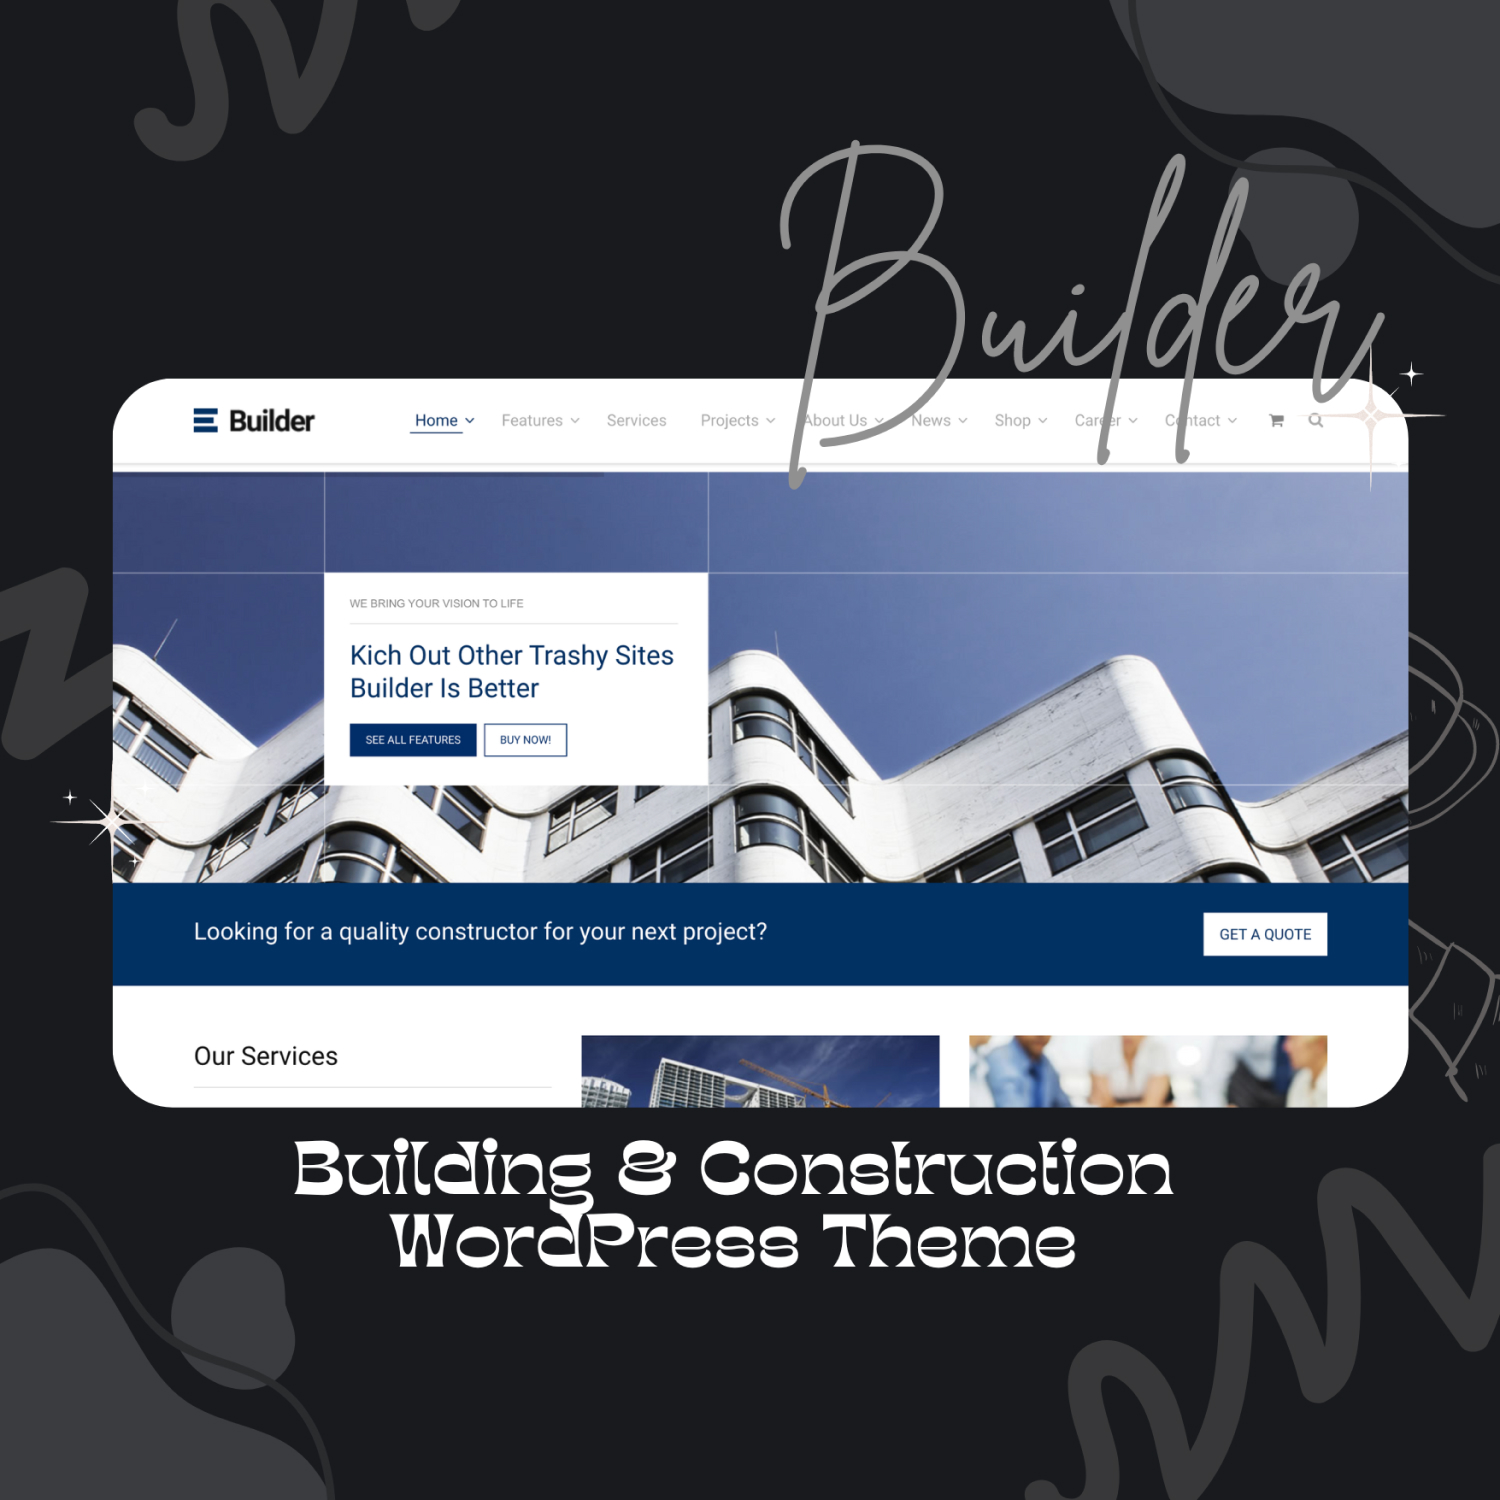 Builder - Building & Construction WordPress Theme.